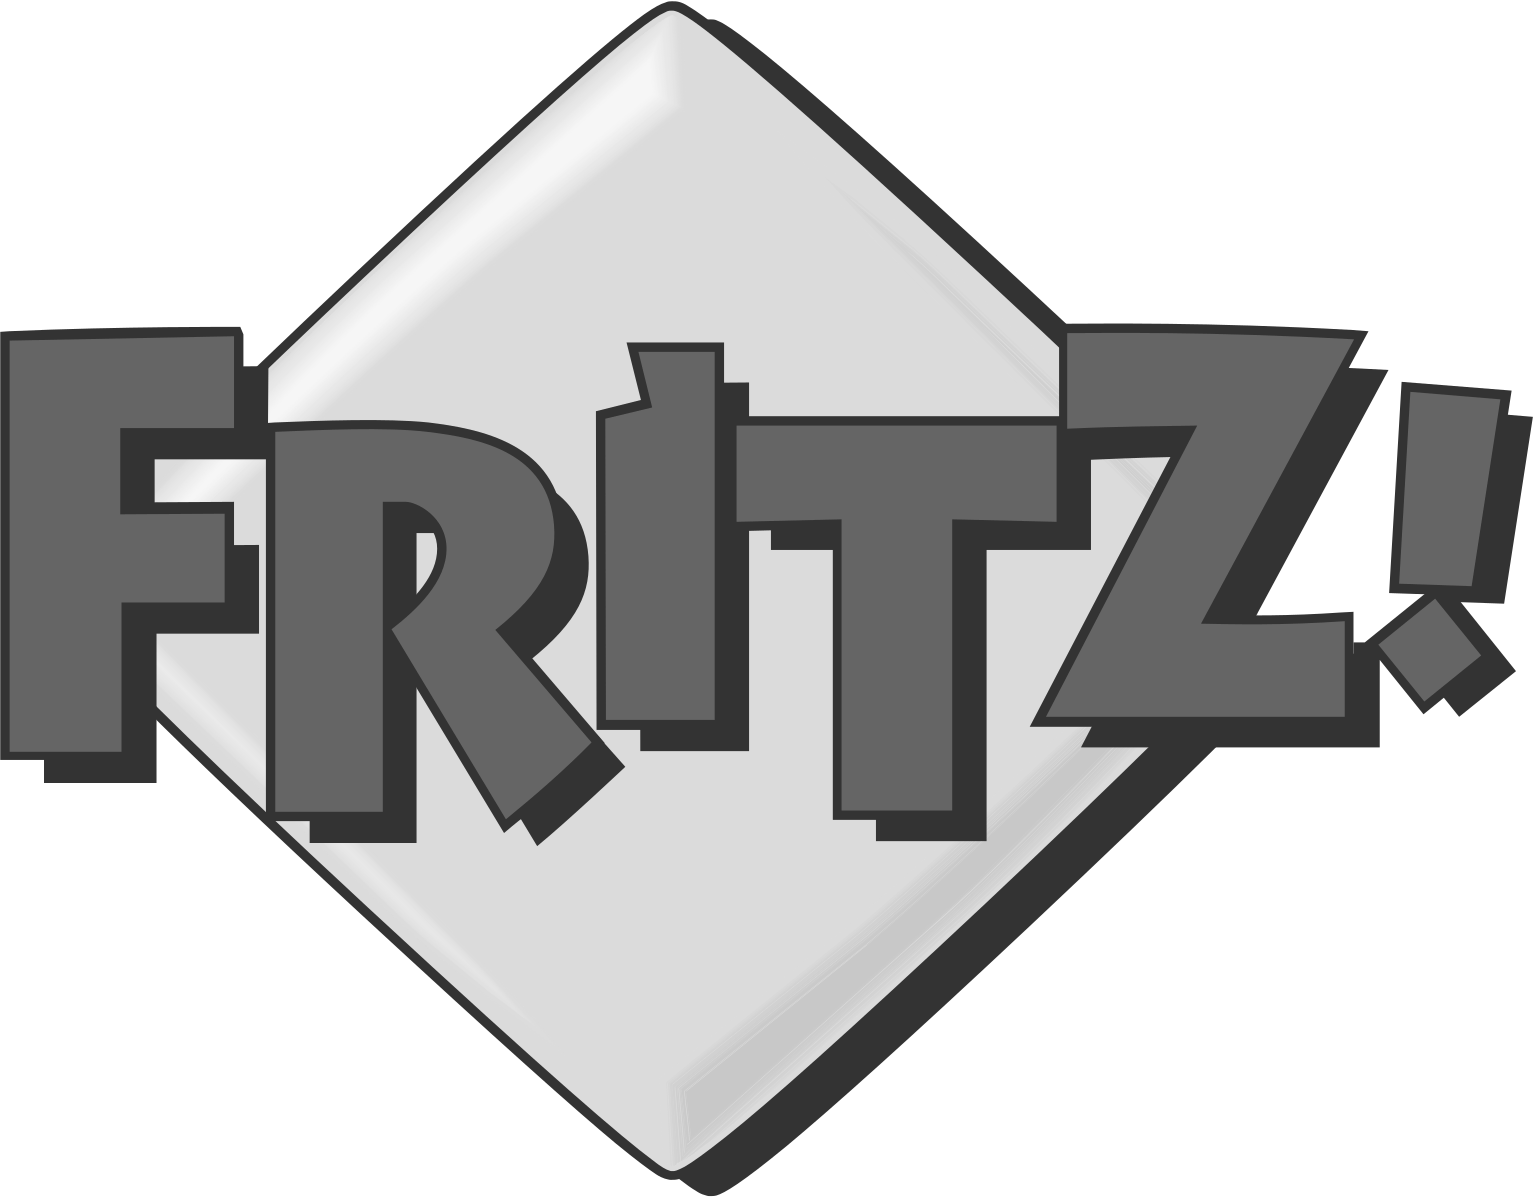 Fritz logo color